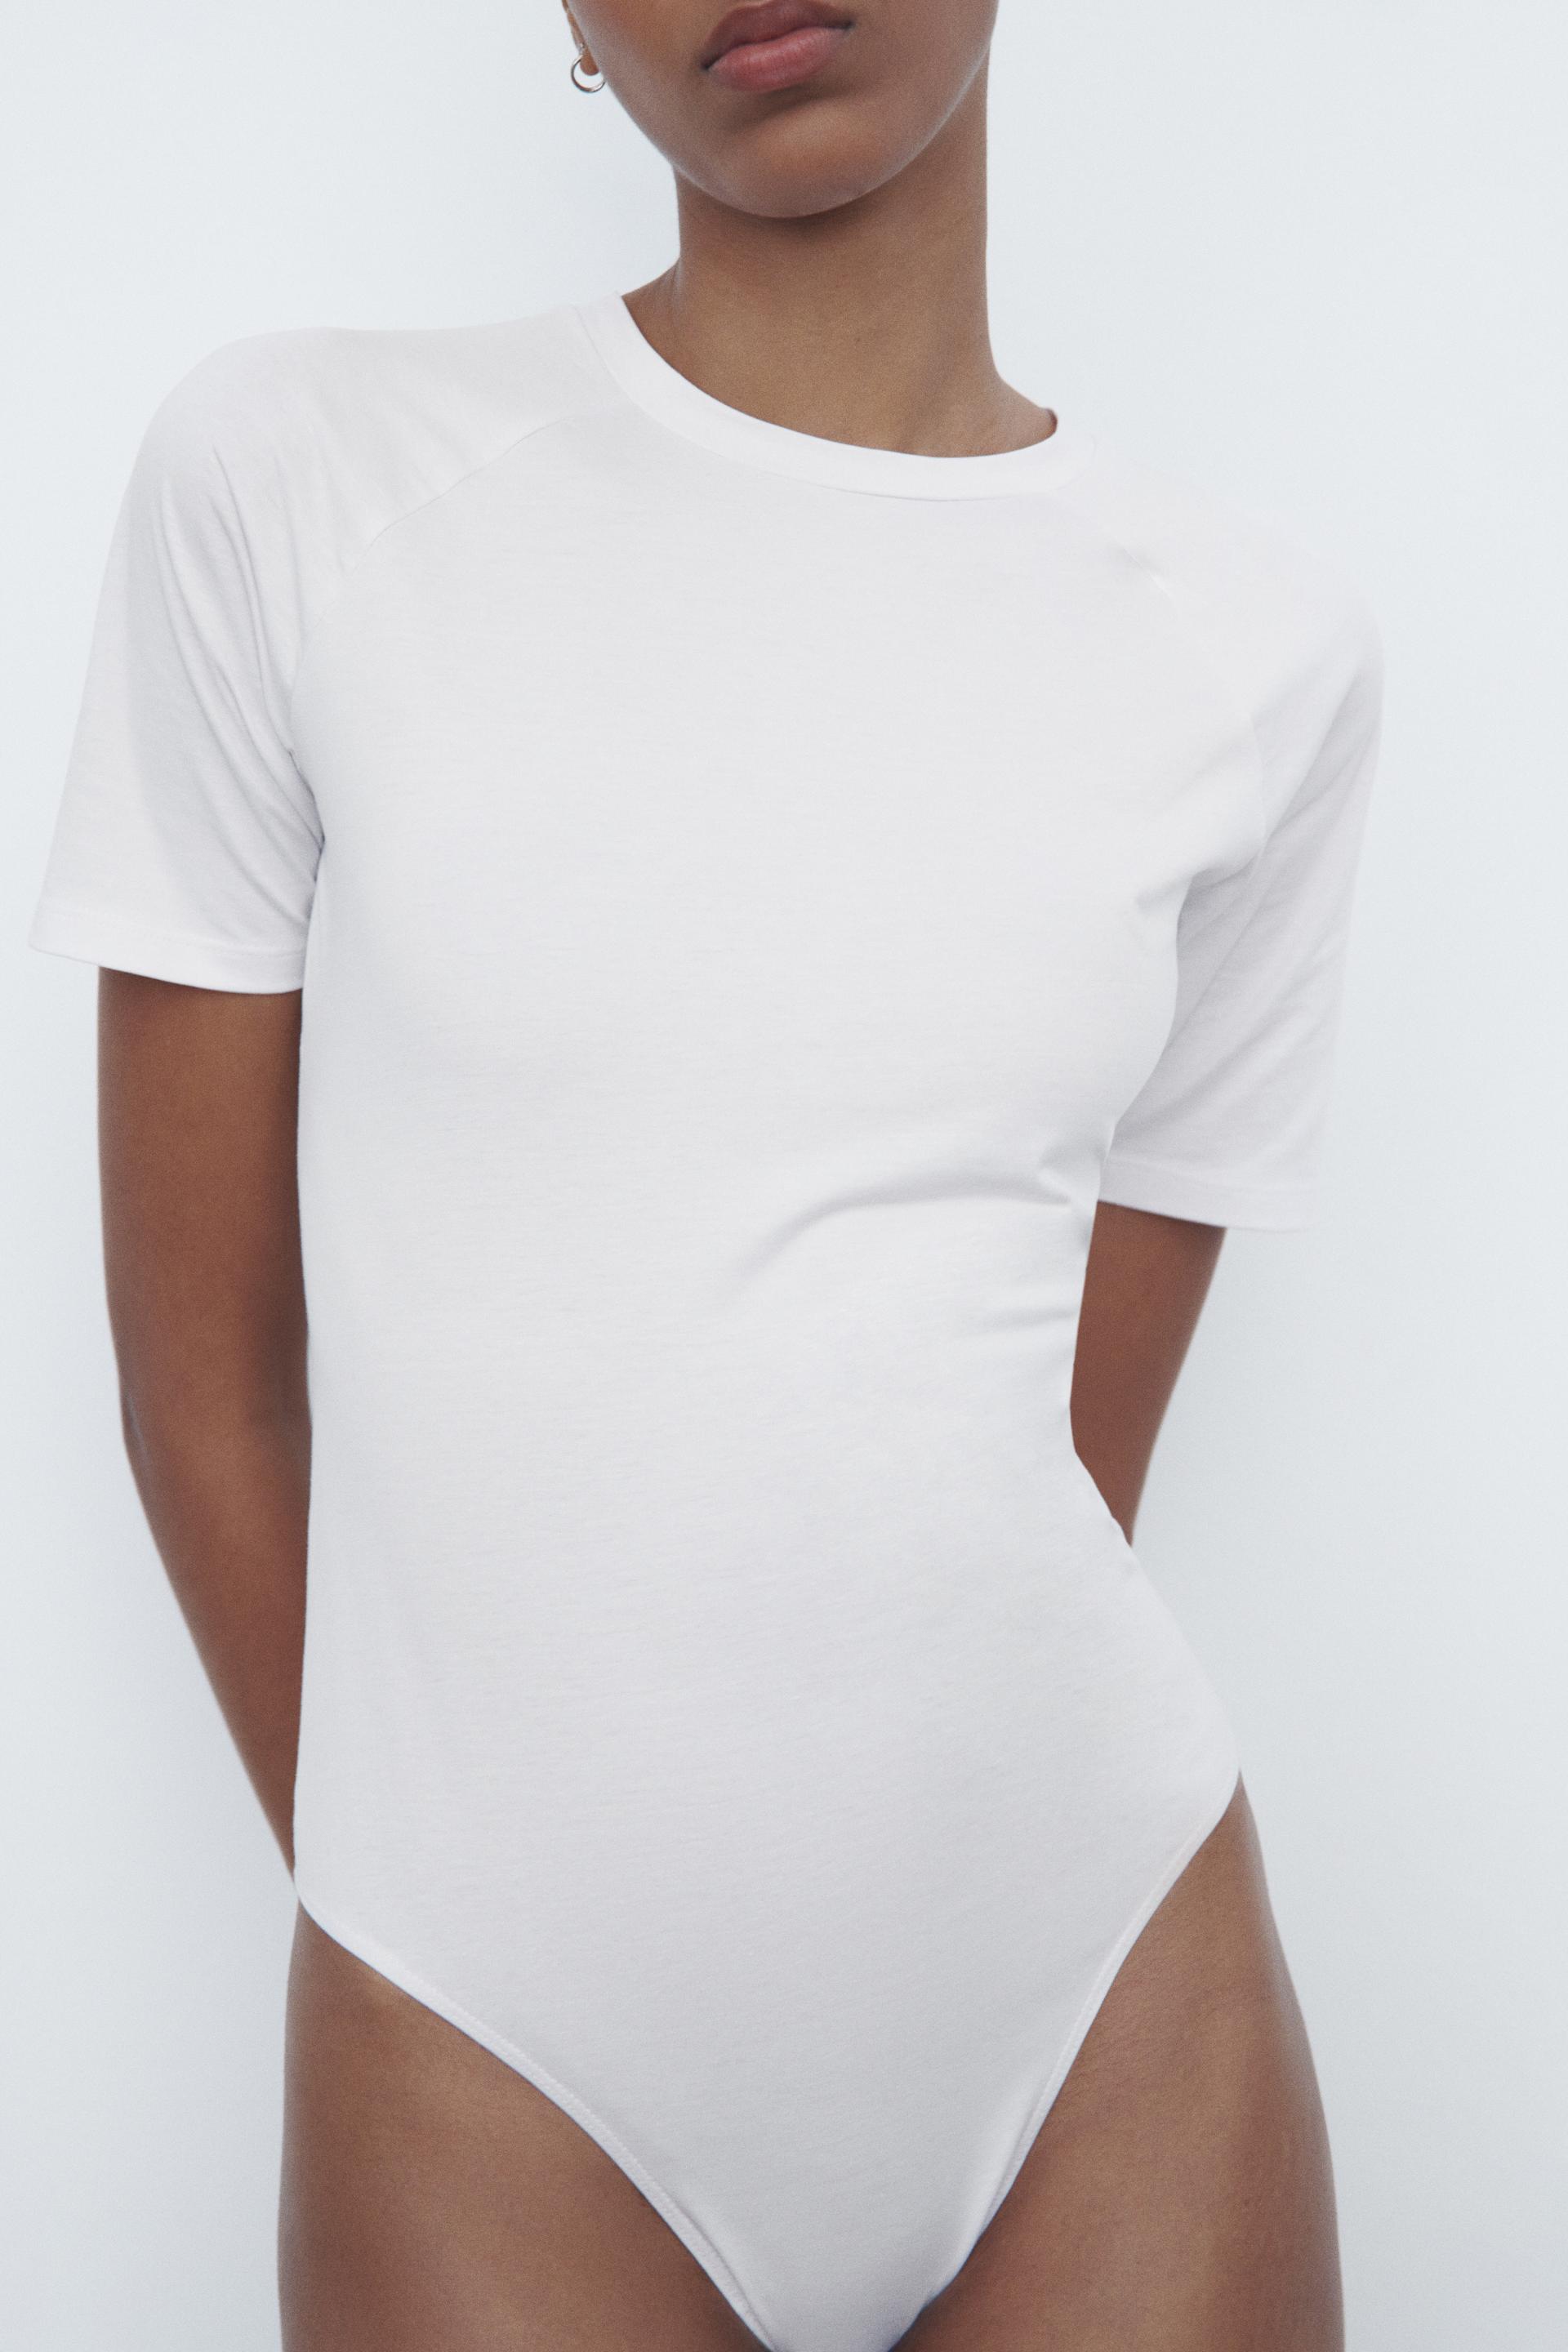 Zara Women's Bodysuit Sleeveless w/ Metal Detail Size S Mustard